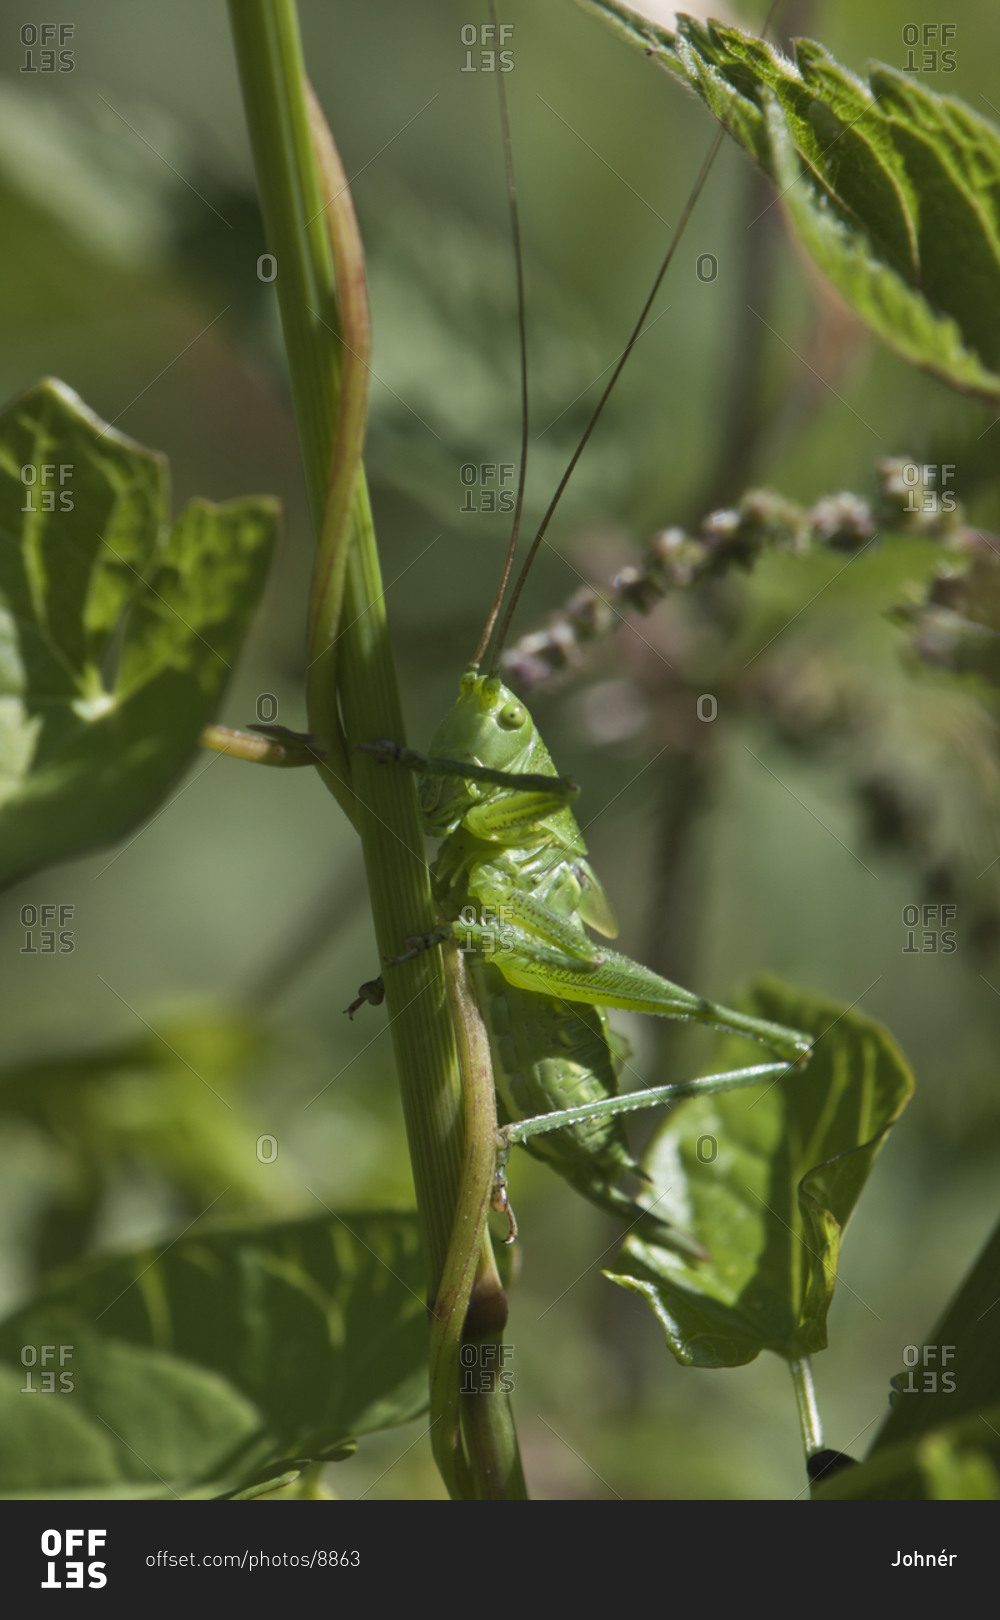 Great green bush cricket on stem camouflage